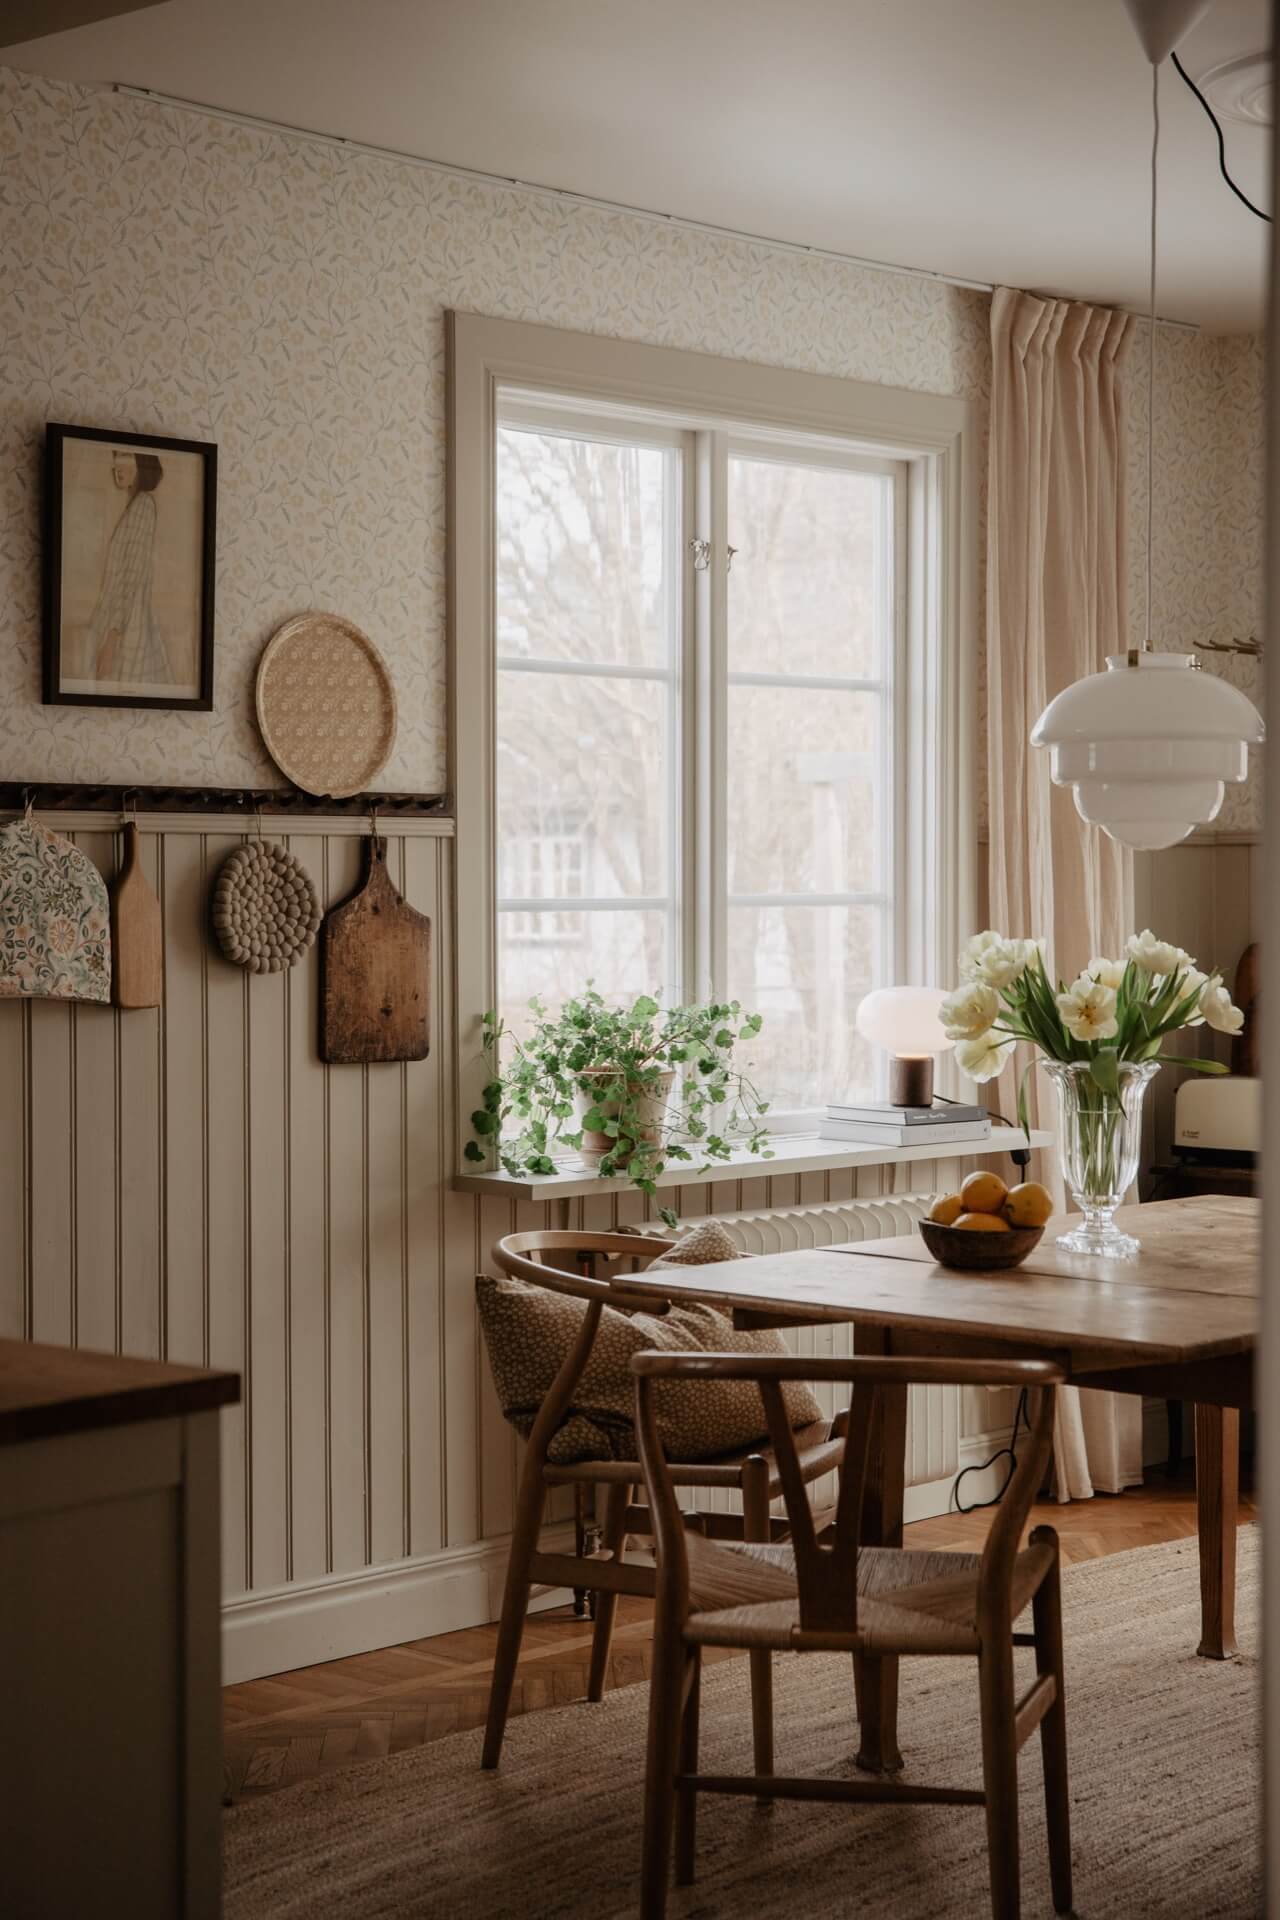 Emelie Sundberg home tour - interior of Swedish home - kitchen table